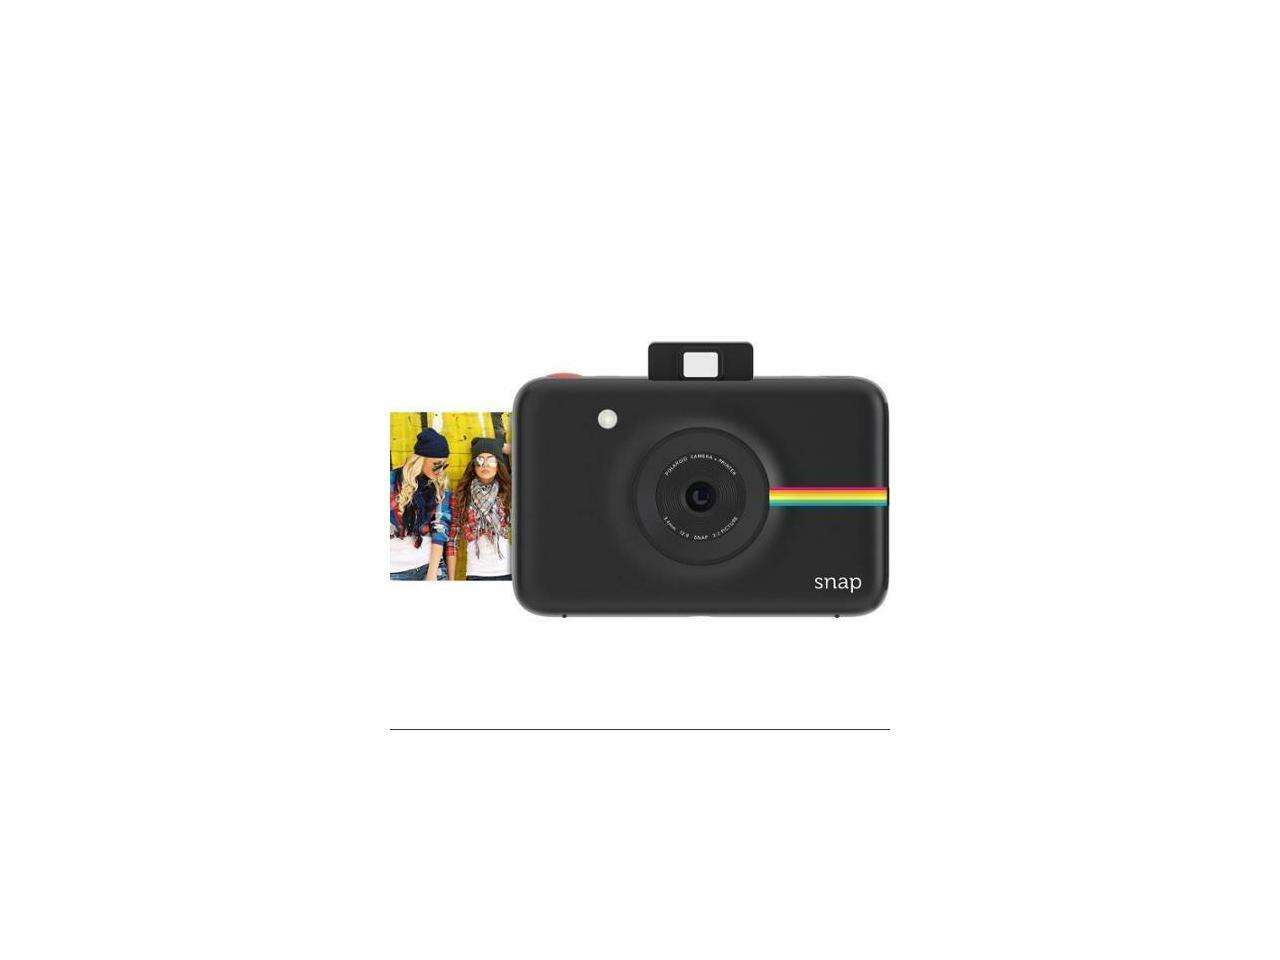 Polaroid Snap Instant Digital Camera (Black) with ZINK Zero Ink Technology